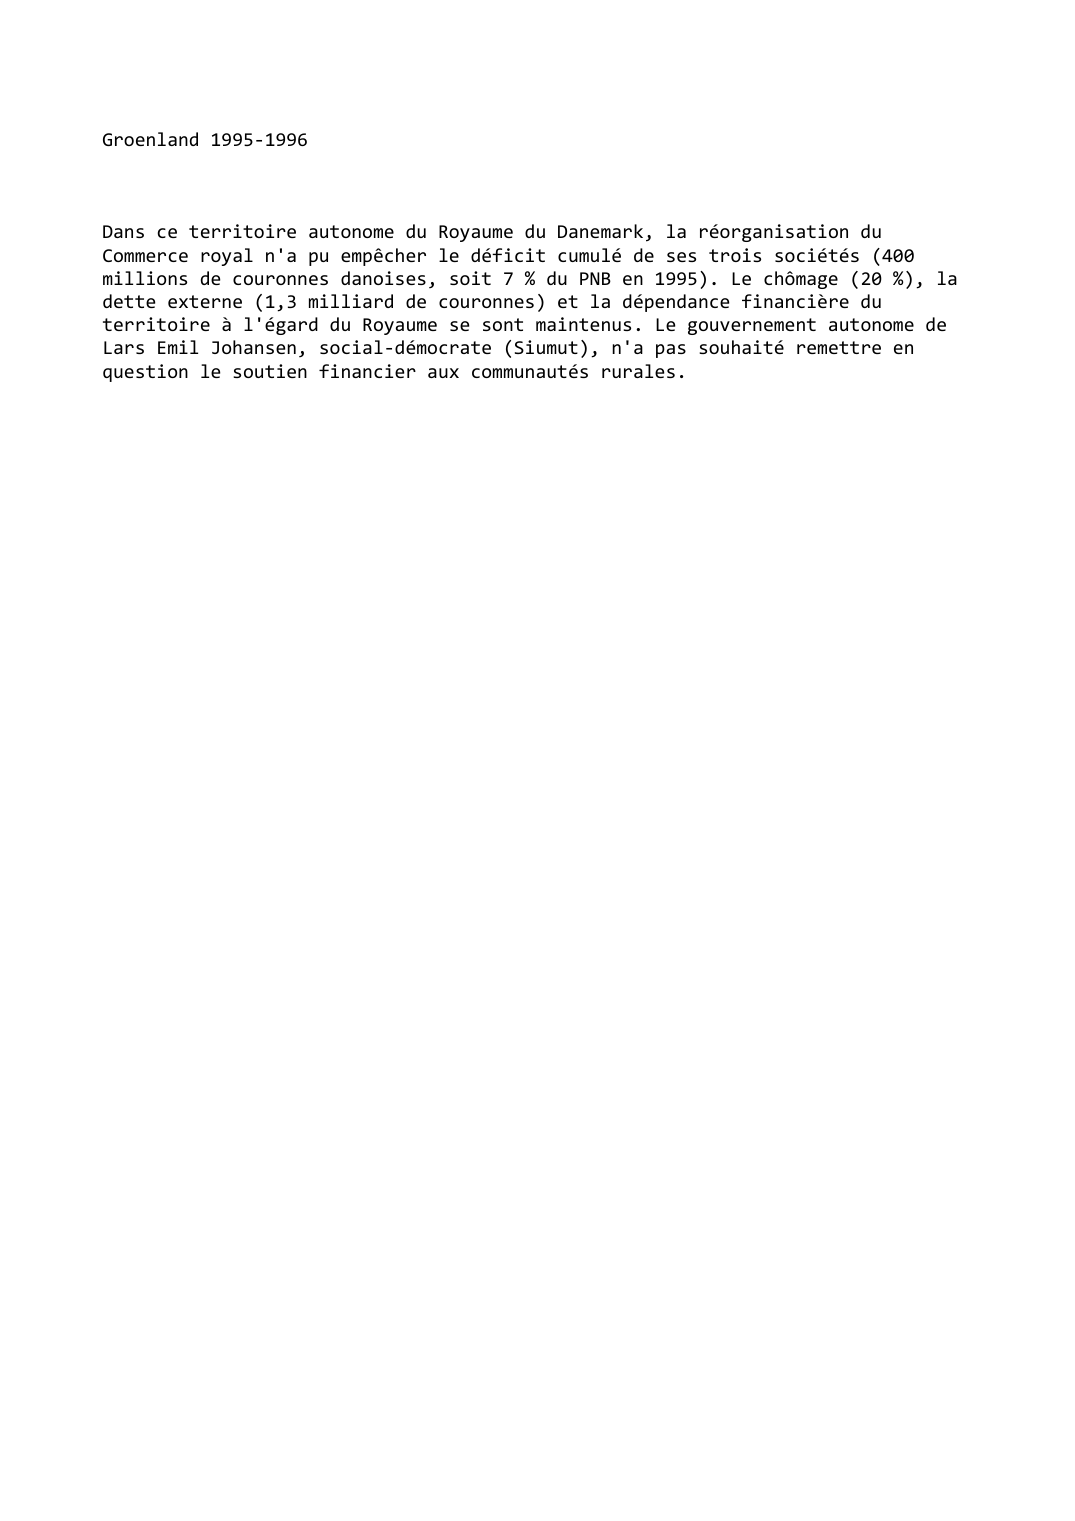 Prévisualisation du document Groenland (1995-1996)